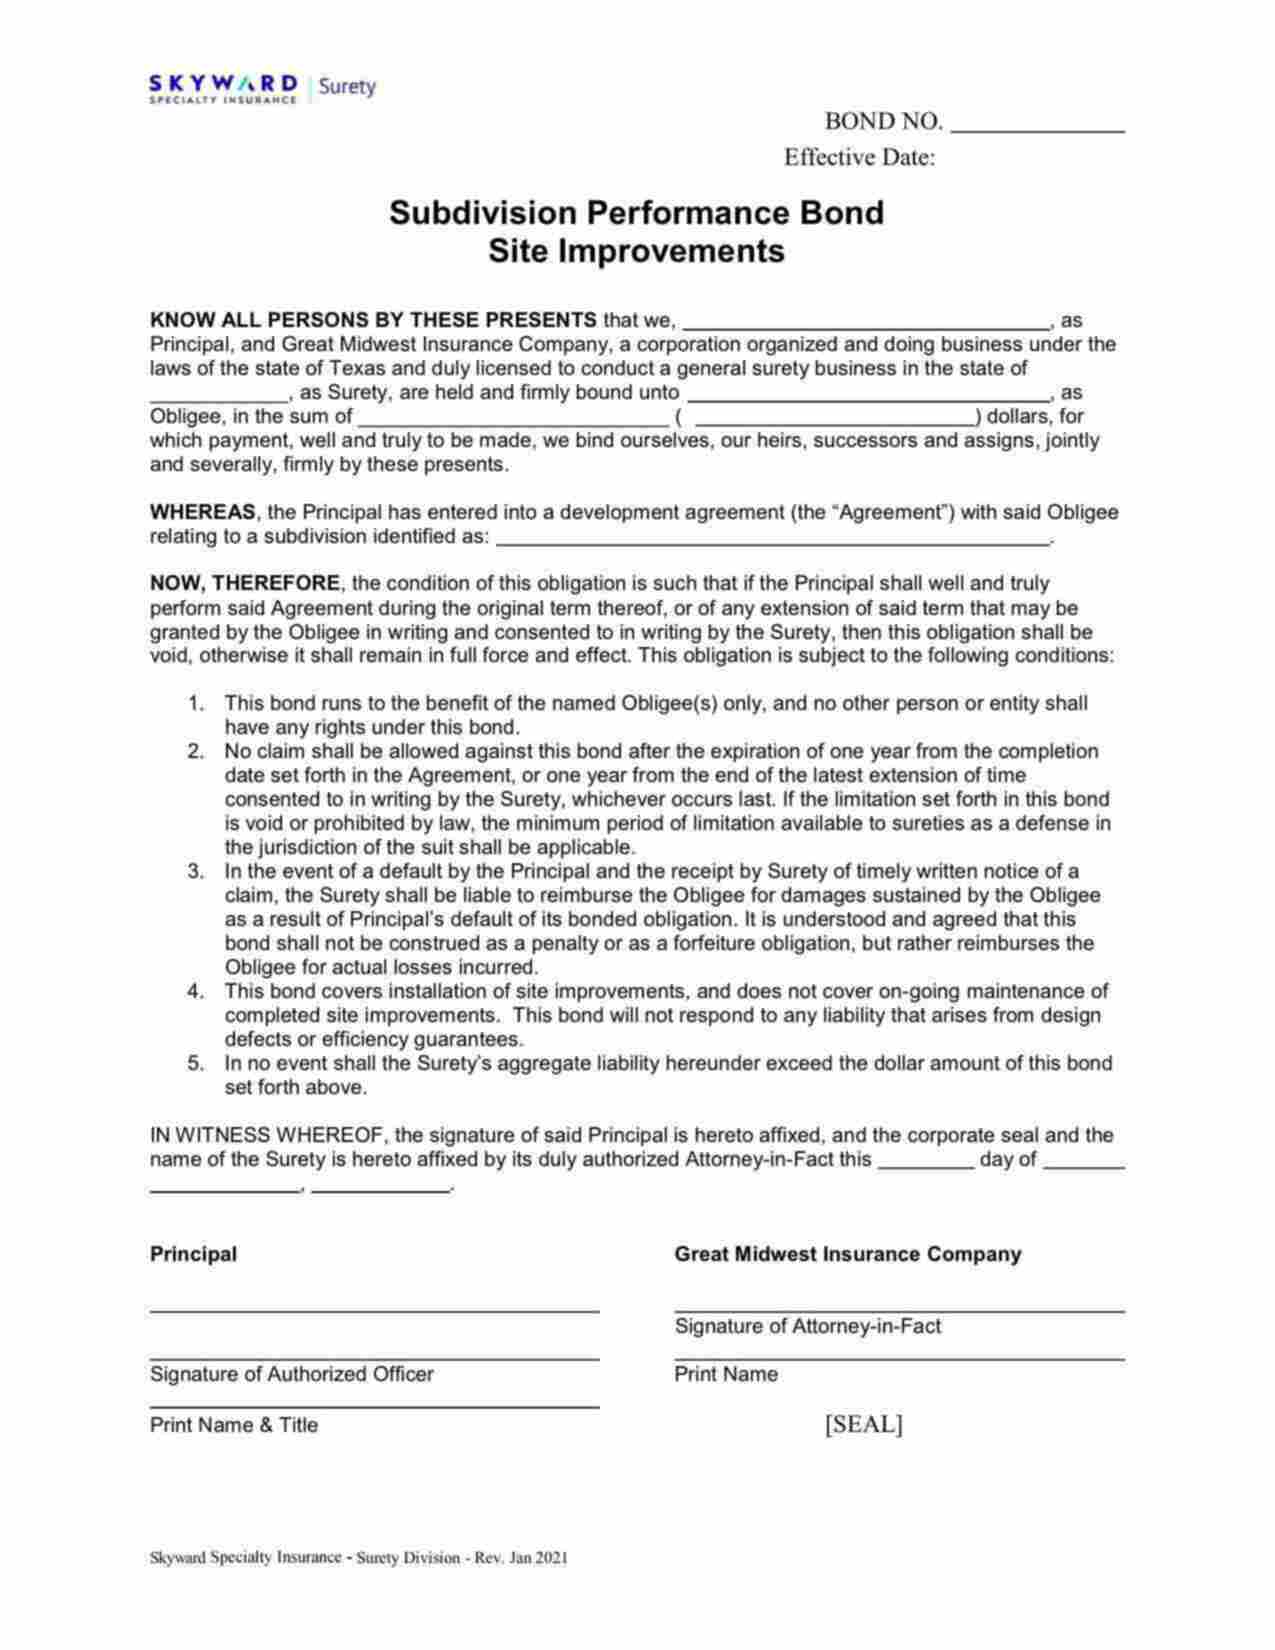 Wyoming Subdivision, Site Improvement or Development Bond Form